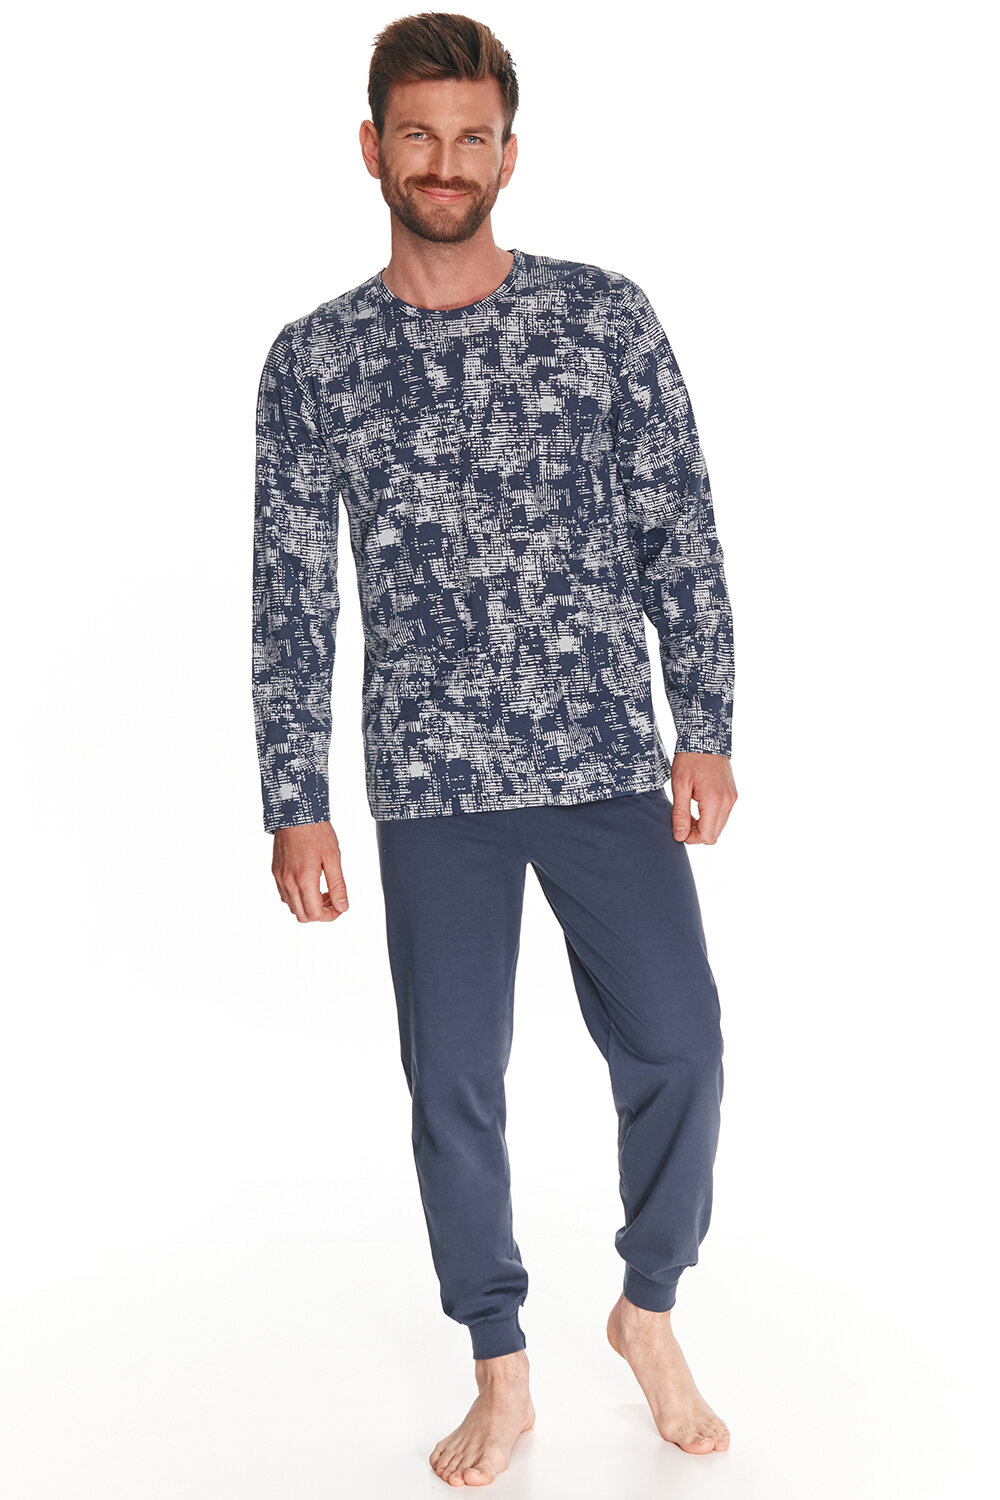 Пижама мужская TARO Greg 2643-2644-01, синий, хлопок 100% (Размер: XXL)